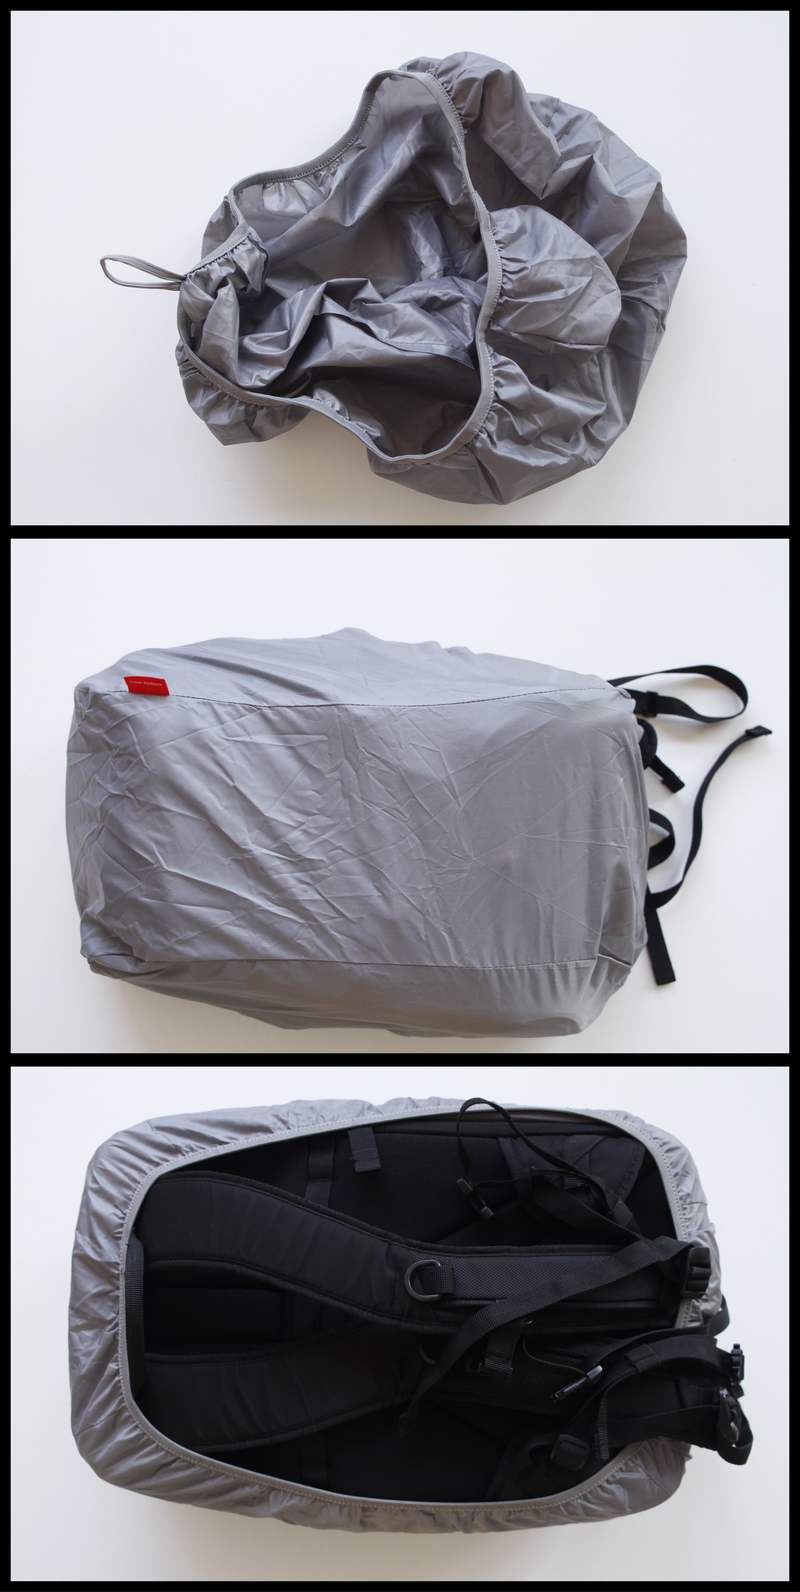 Le sac à dos photo Manfrotto Travel Backpack et sa housse de protection, Ph. Moctar KANE.